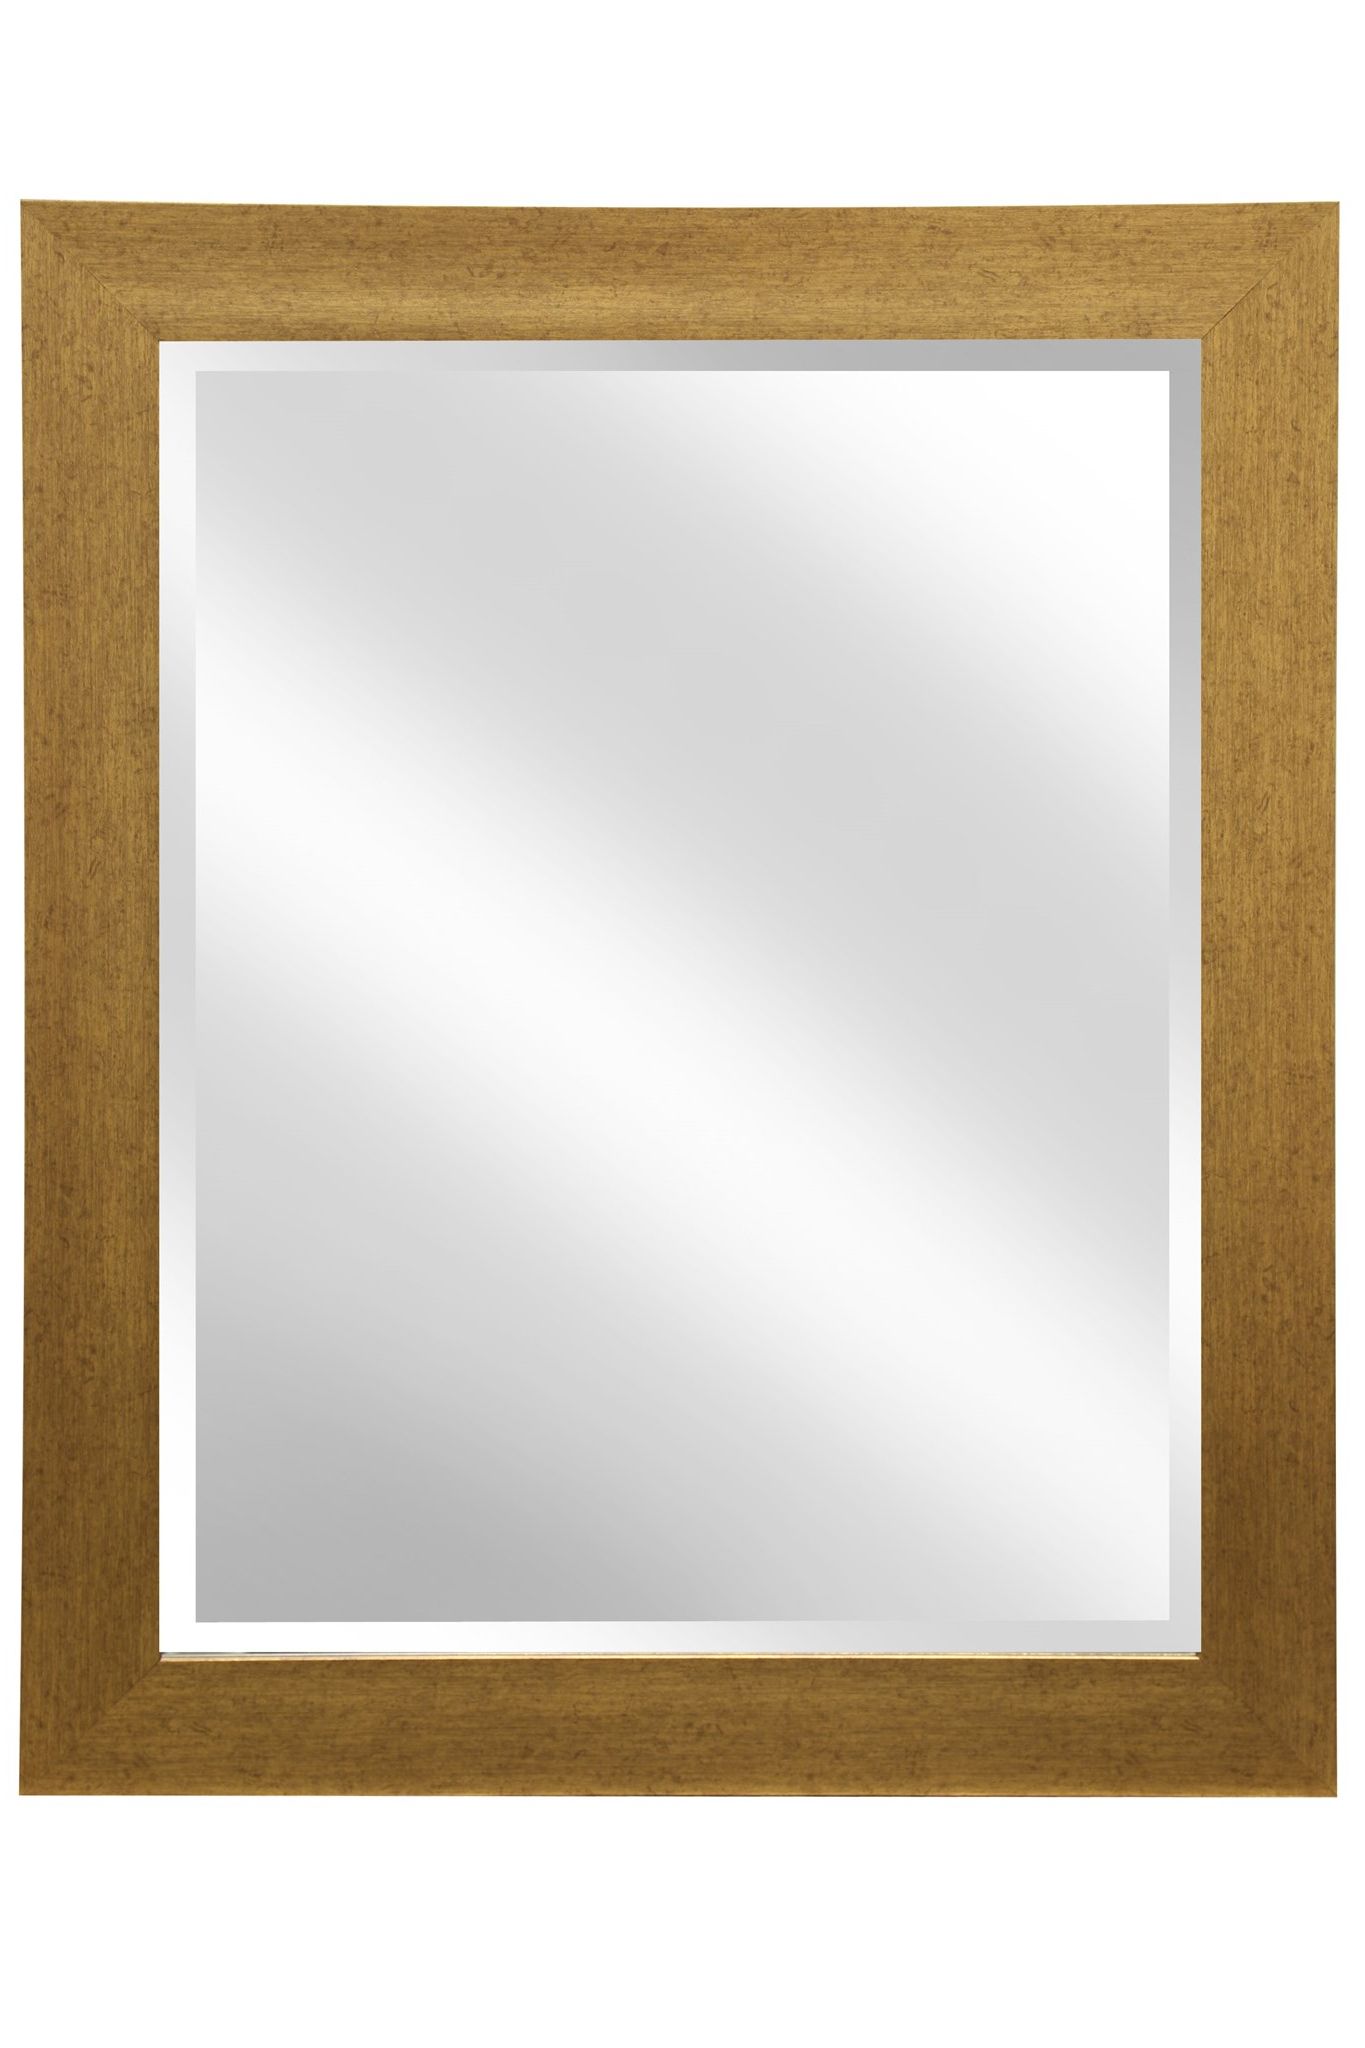 Oak Framed Wall Mirrors For Popular Honey Oak Framed Wall Mirror (View 3 of 20)